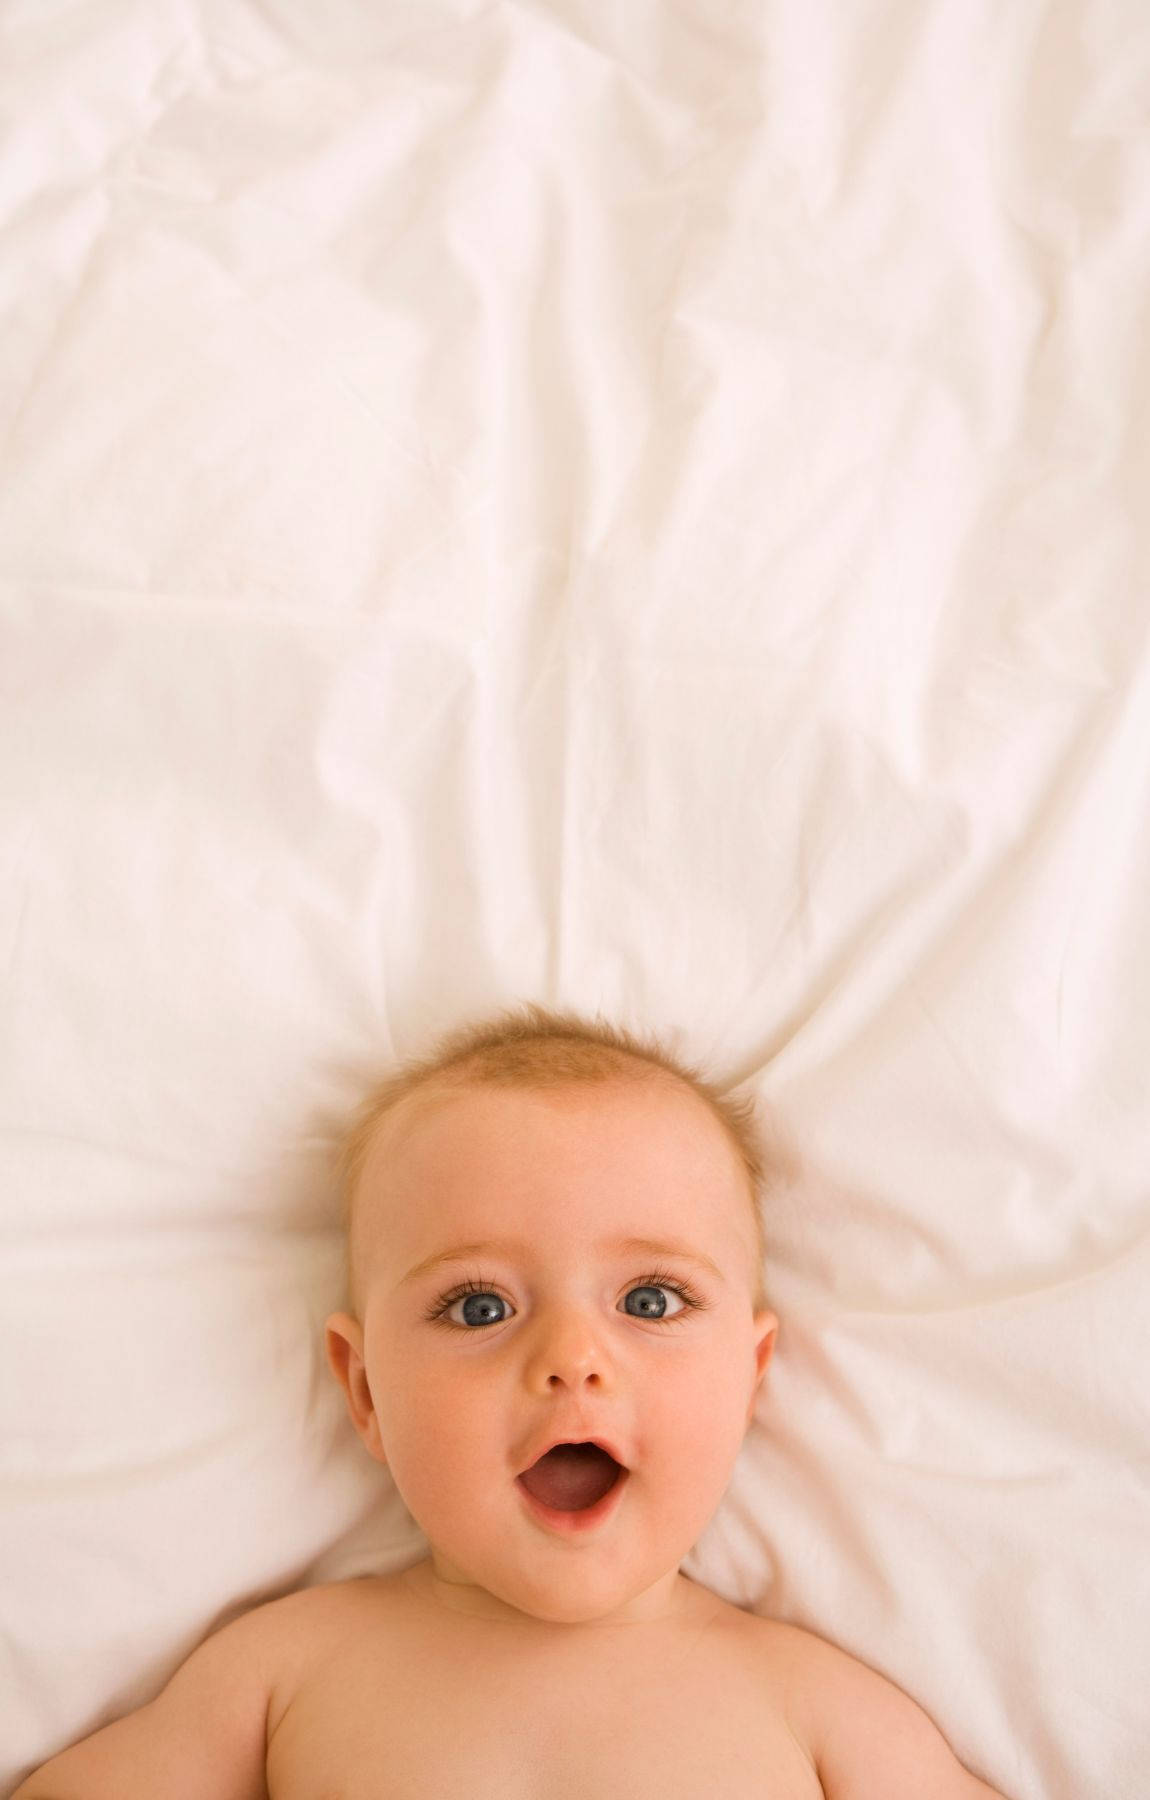 Baby Fotografering 1150 X 1800 Wallpaper